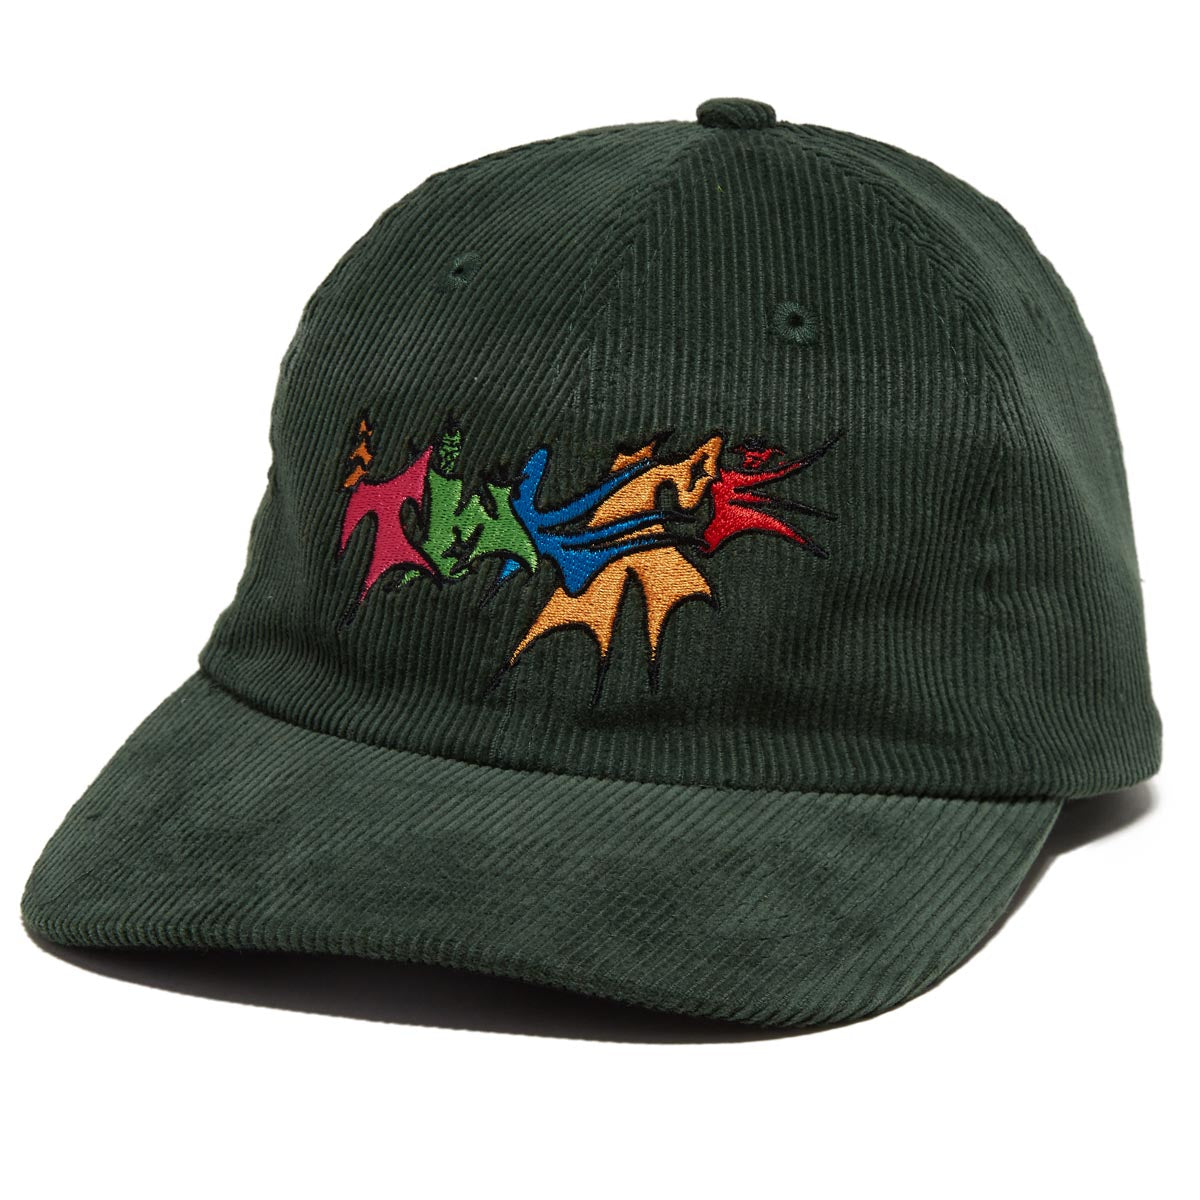 There Slumberland Strapback Hat - Green image 1